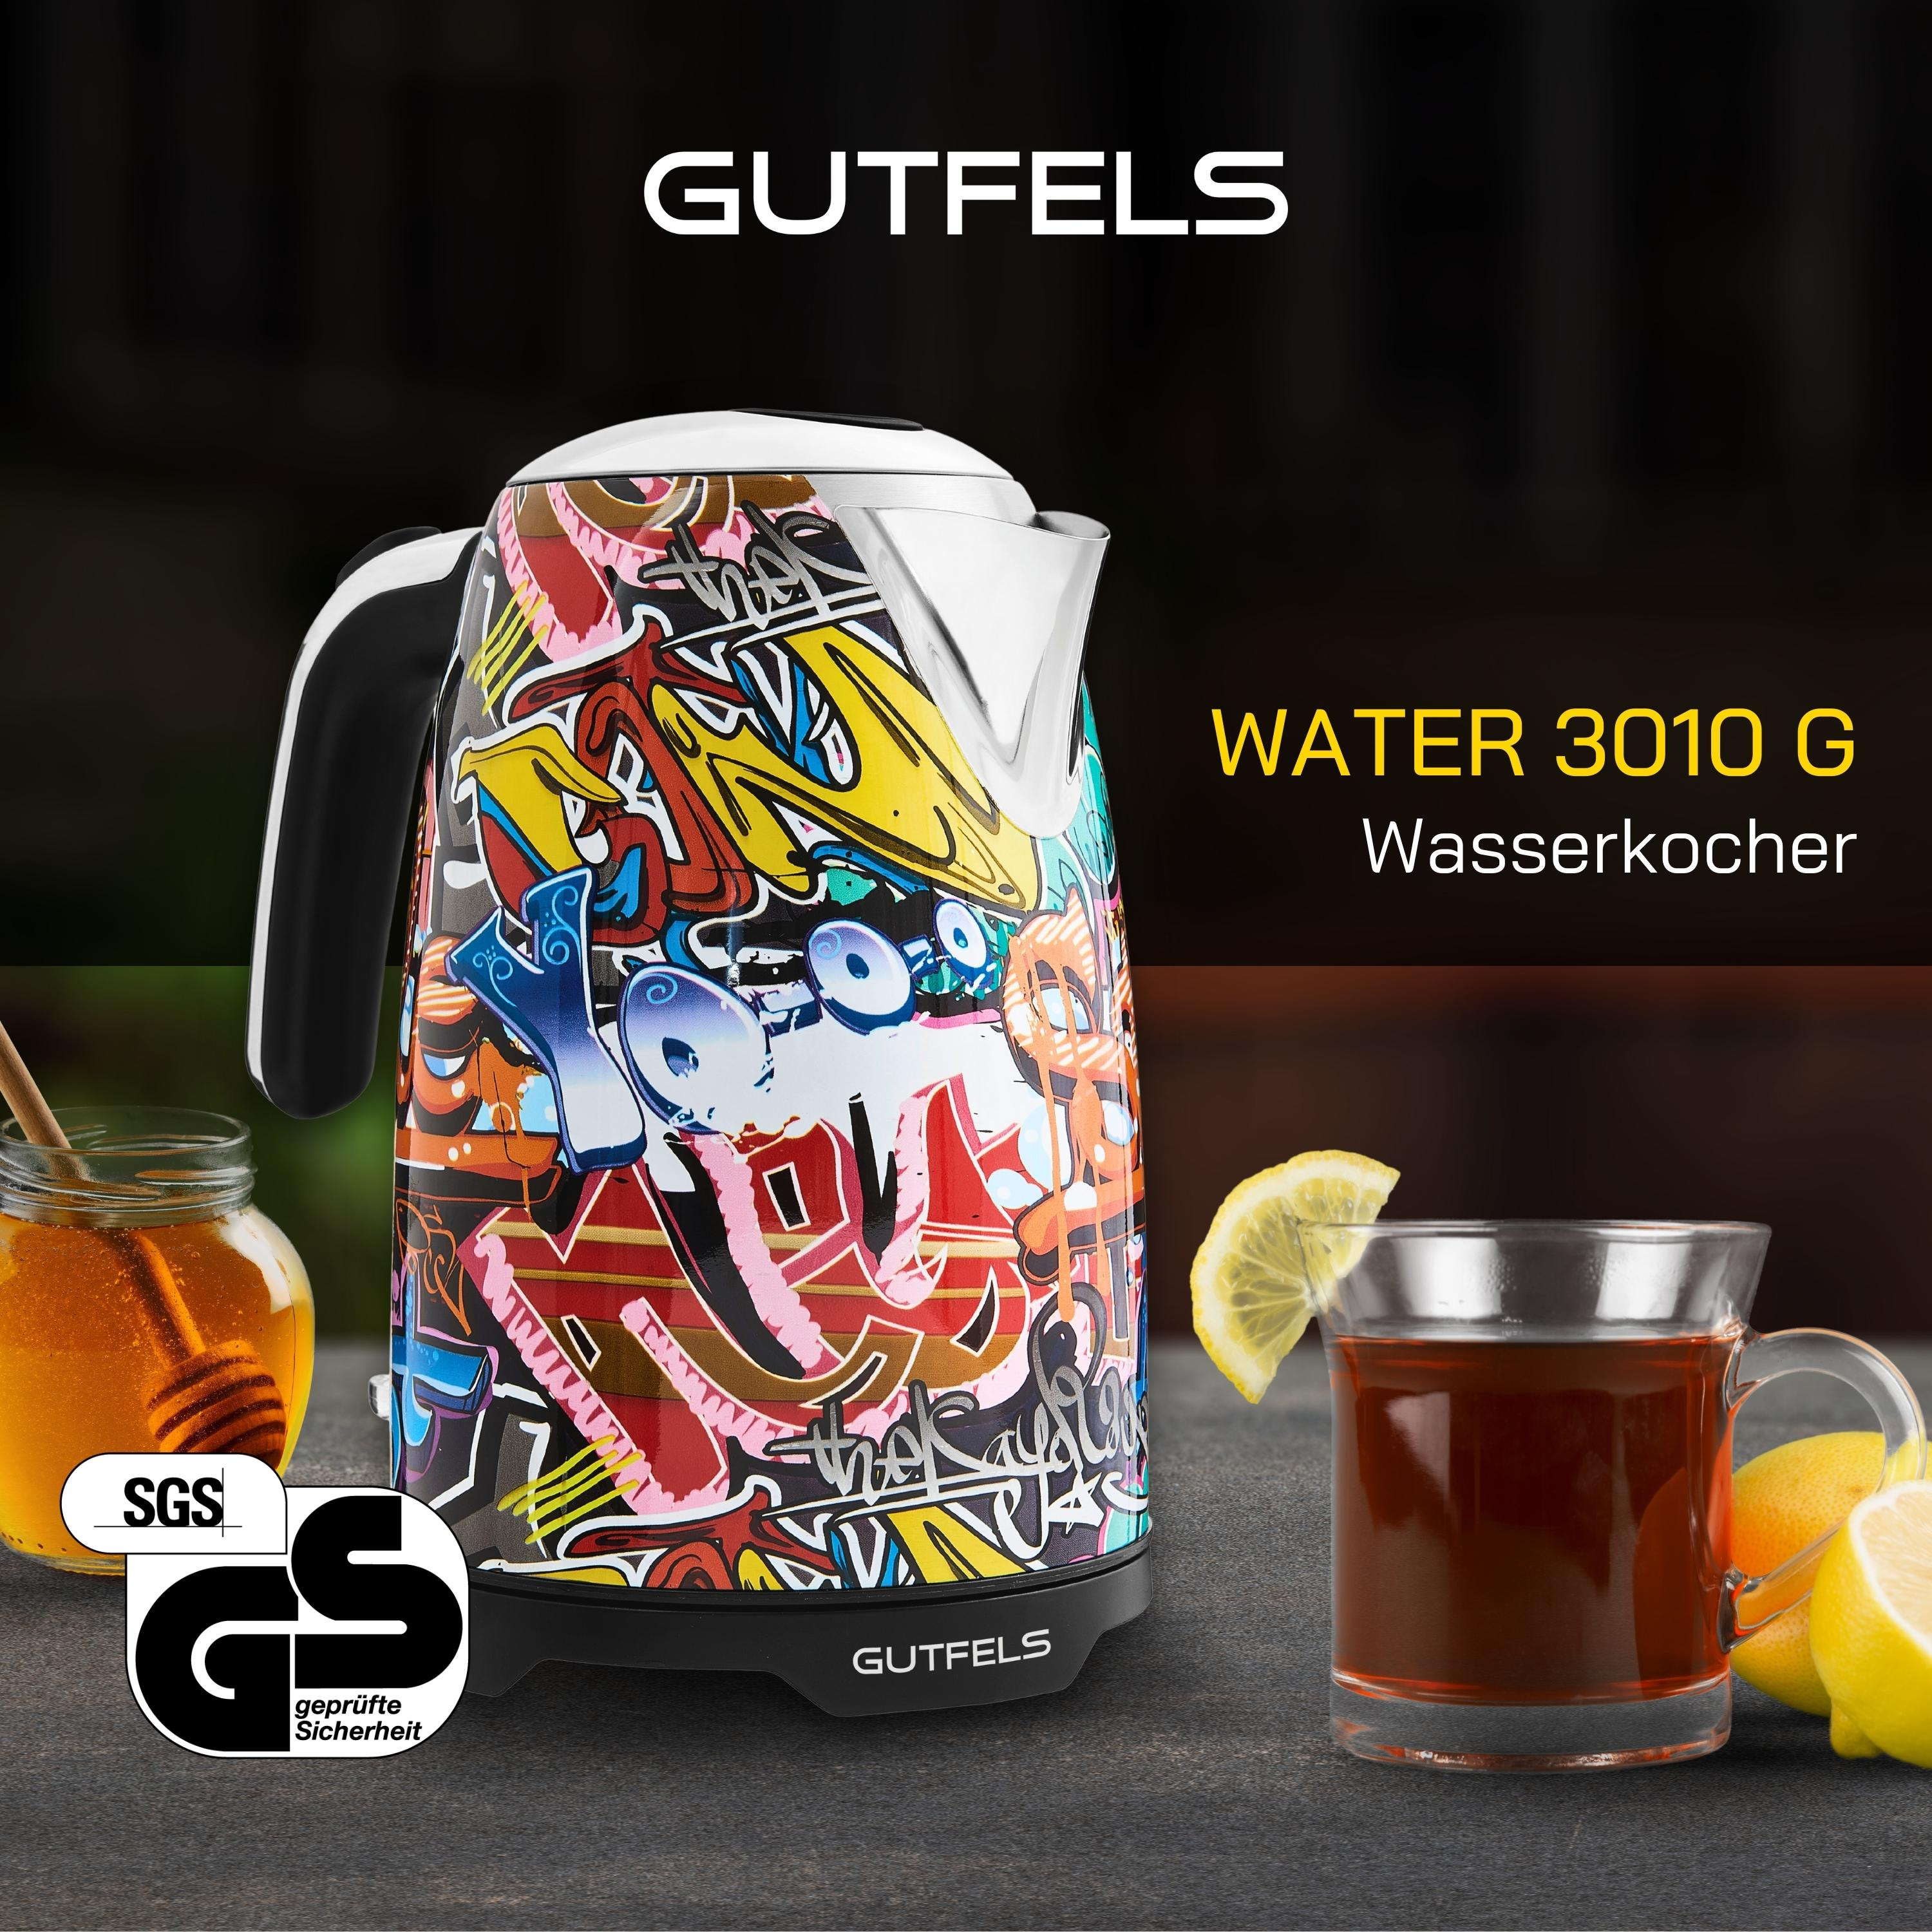 WATER Wasserkocher, GUTFELS G 3010 Bunt